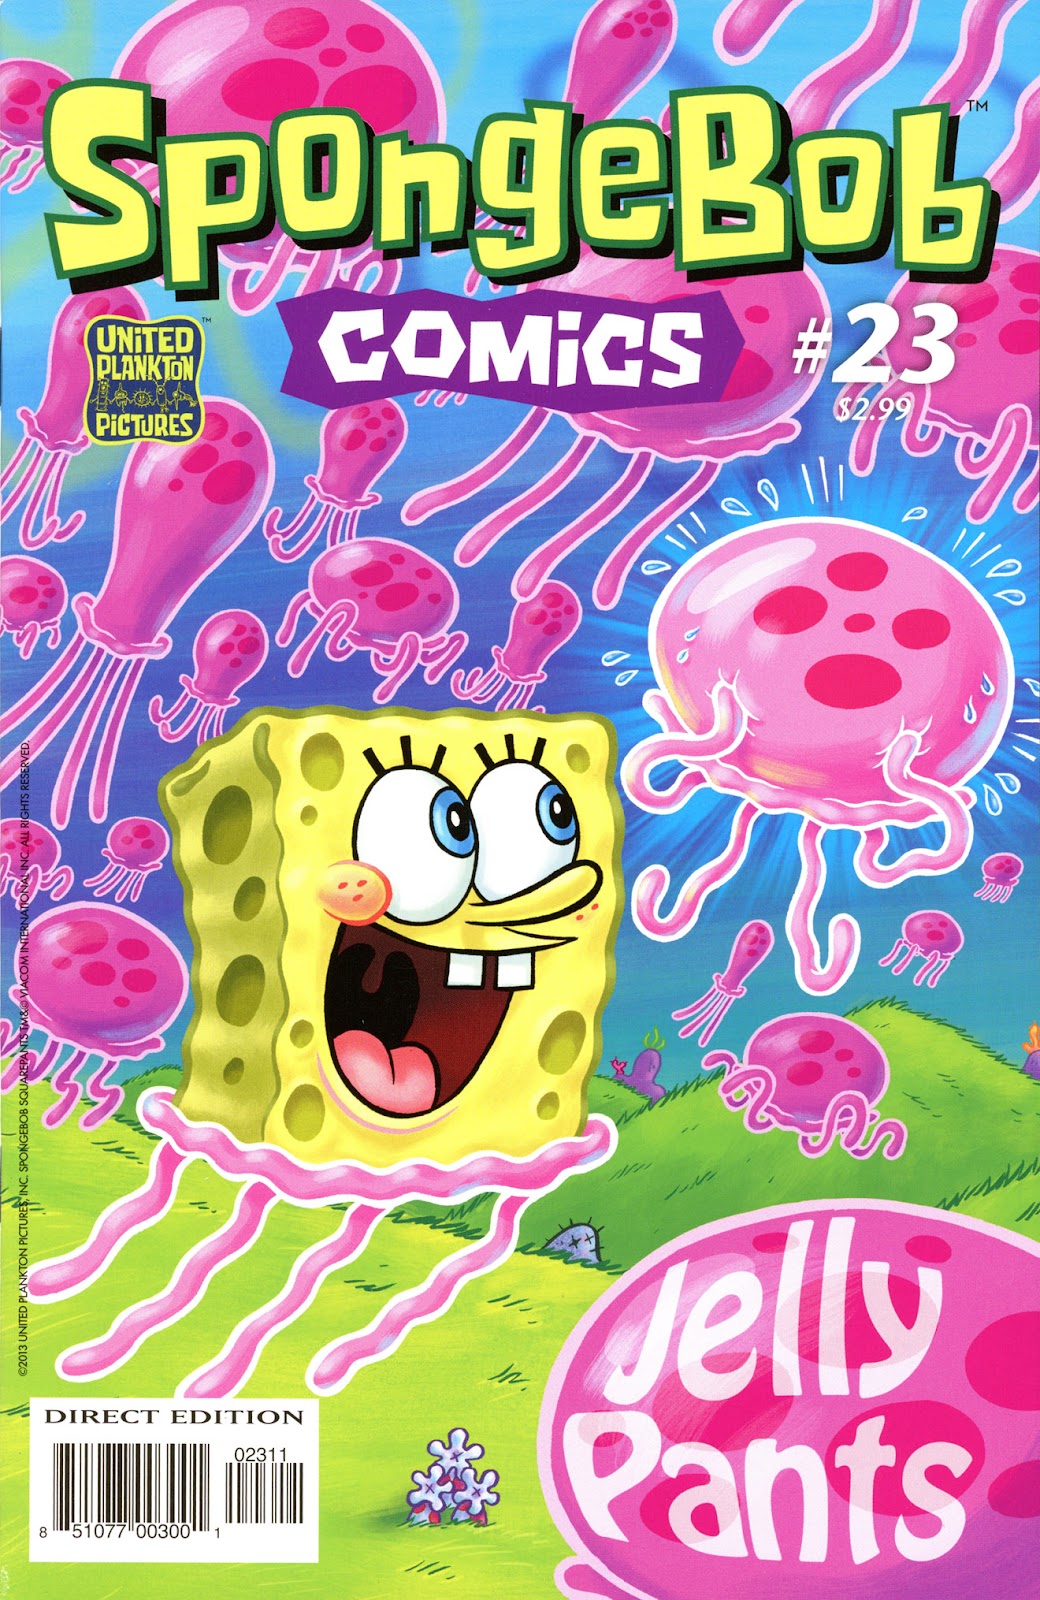 SpongeBob Comics issue 23 - Page 1